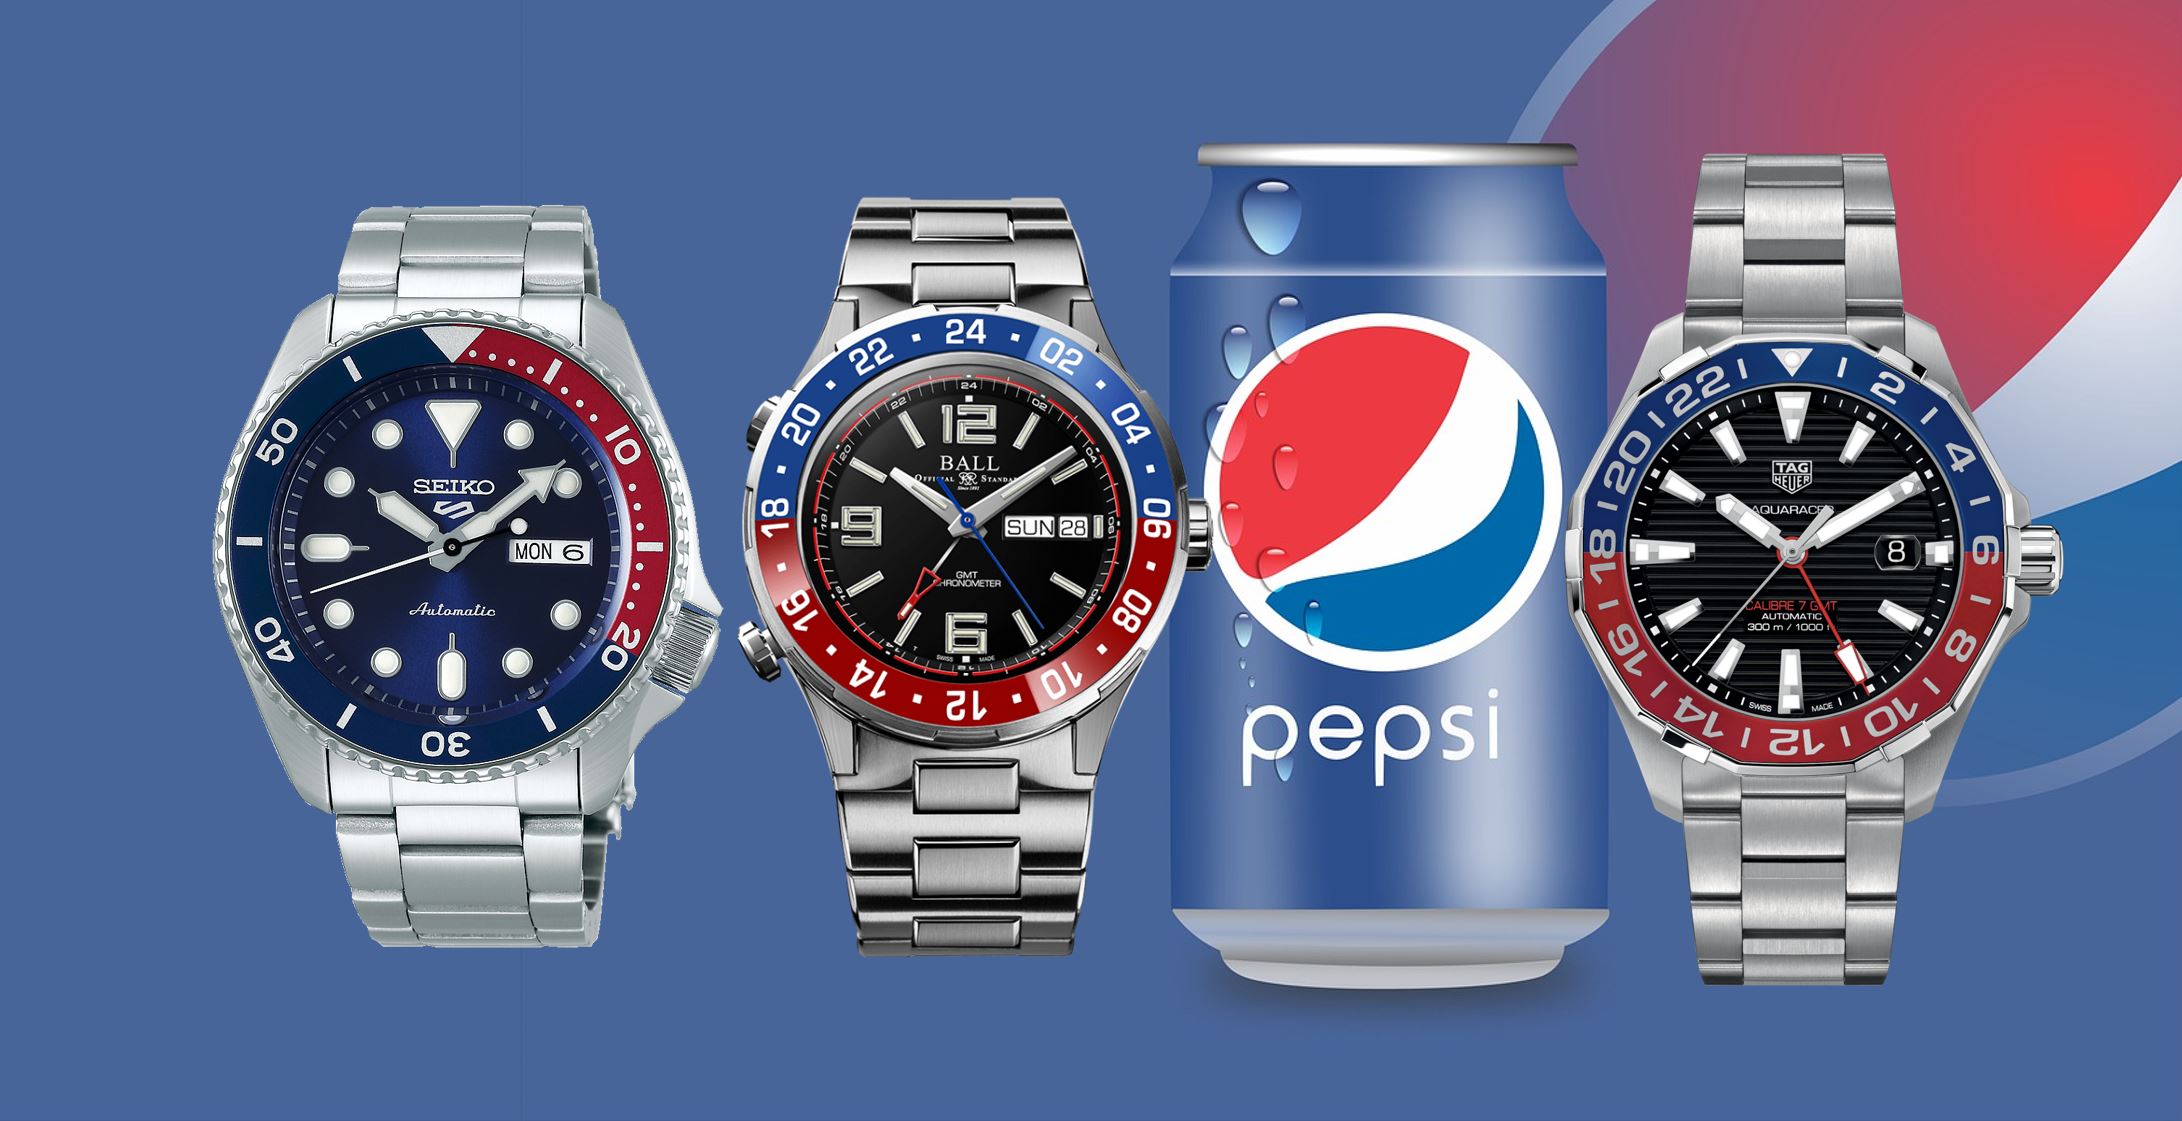 Rolex-Pepsi-Alternativen-Hommagen